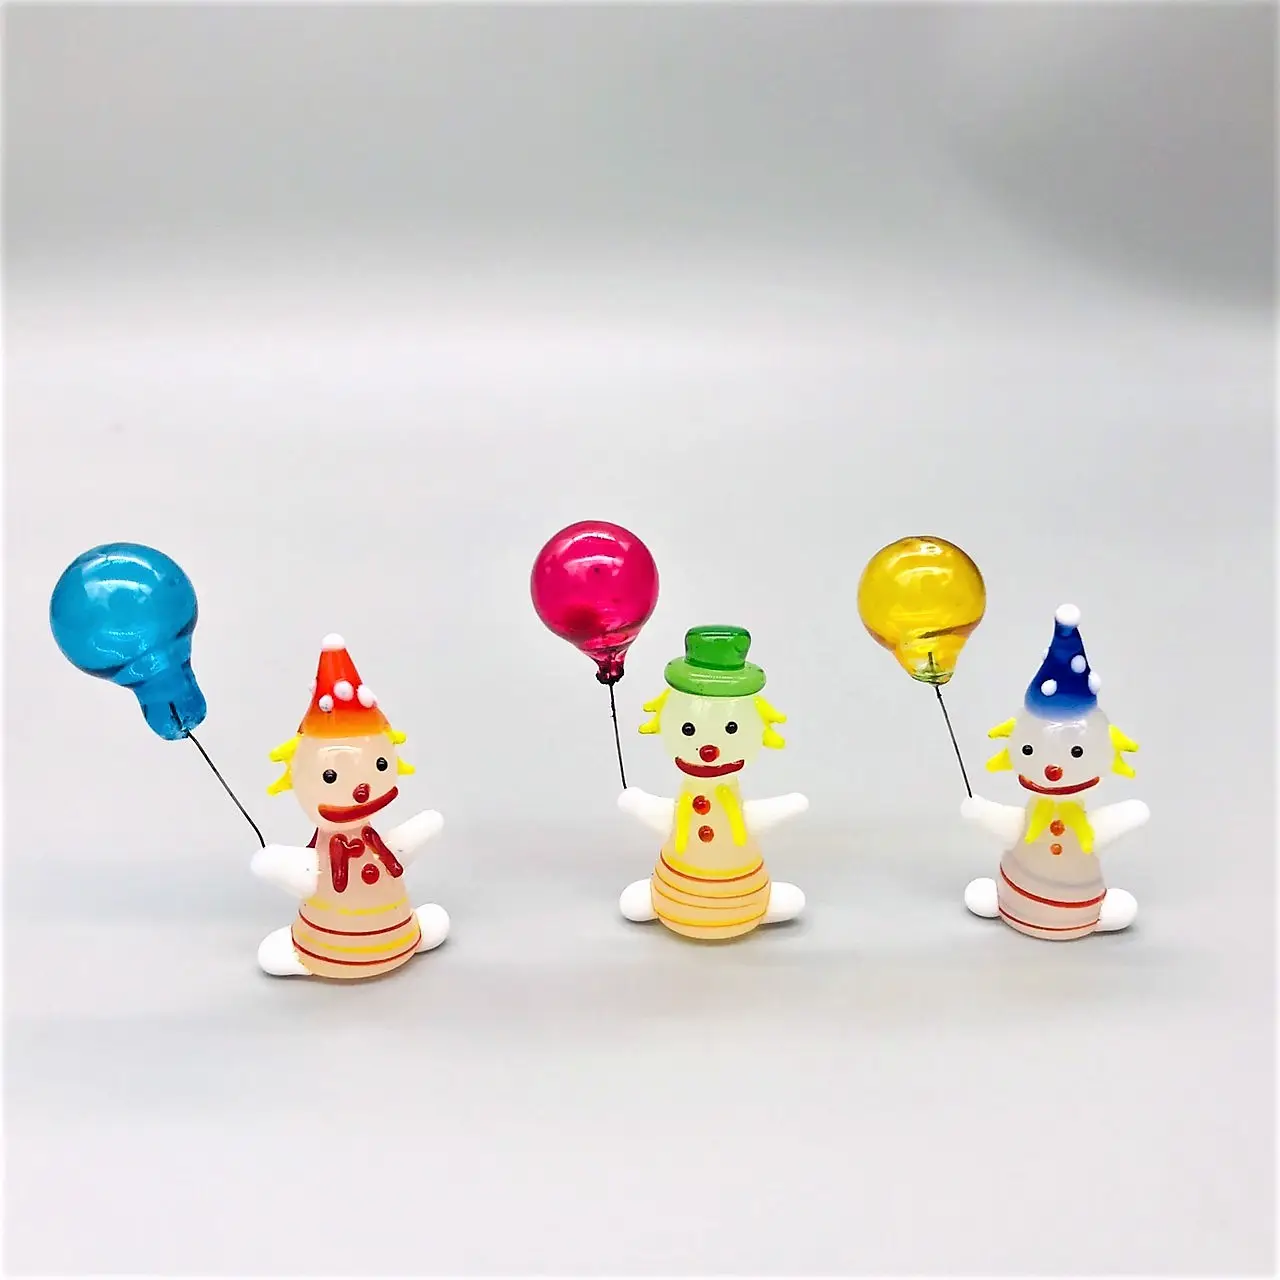 Patung Miniatur Badut dan Balon Kecil Kaca Murano